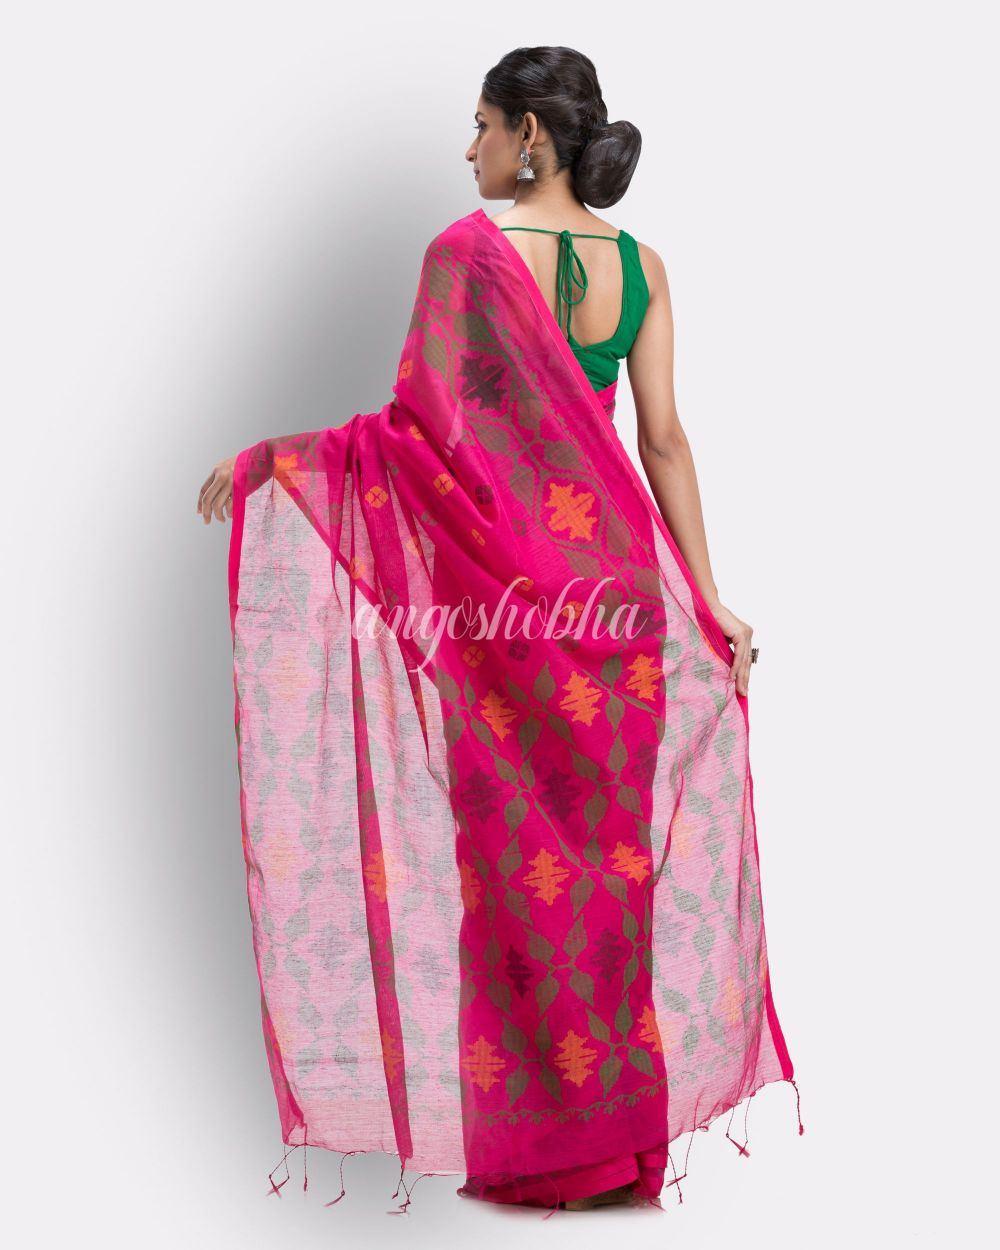 Rani Pink Handloom Printed Cotton blend Saree angoshobha